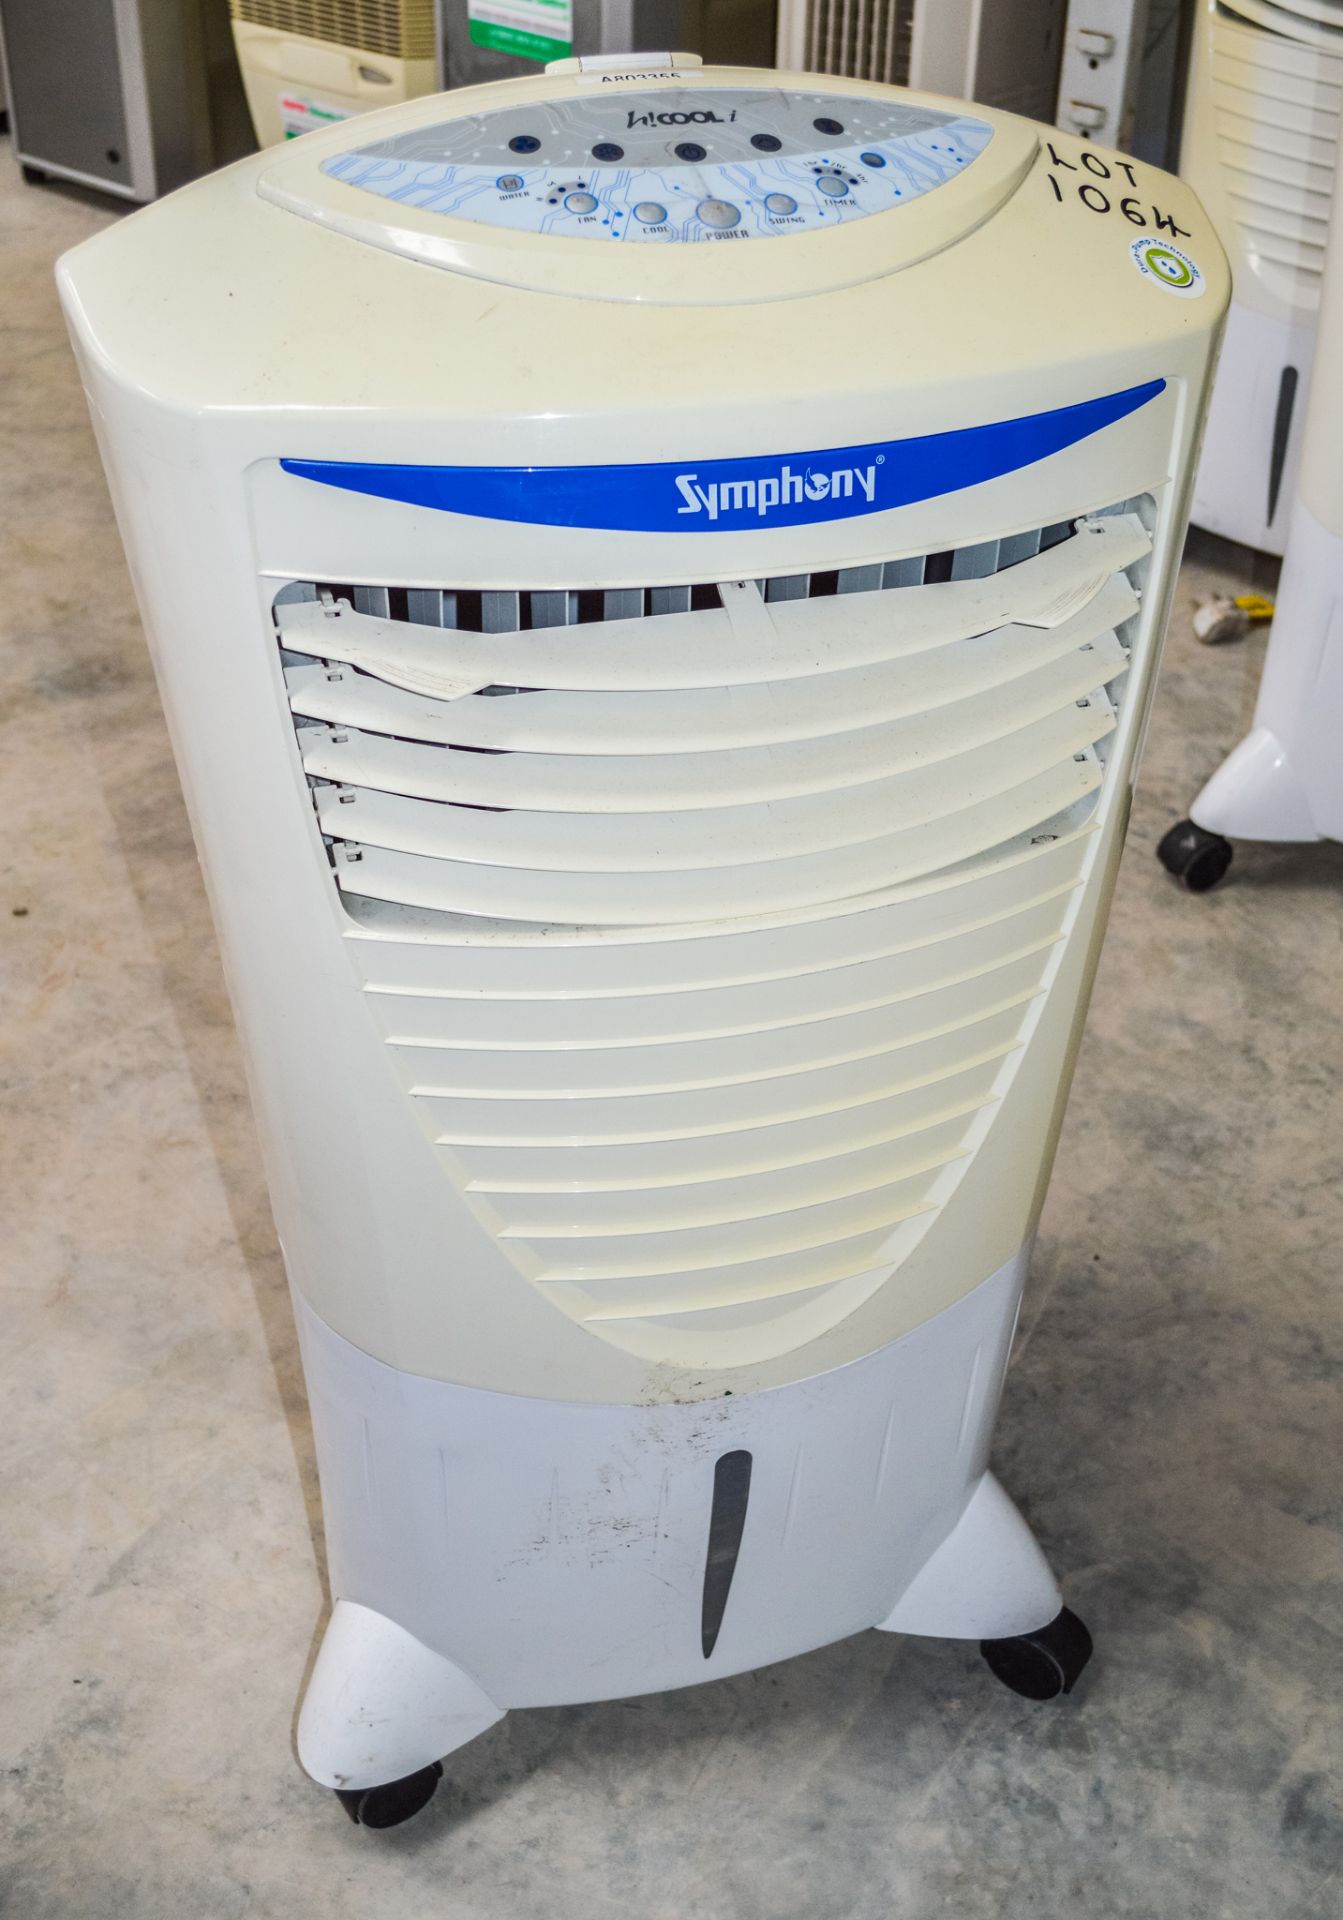 Symphony 240v air conditioning unit A803355